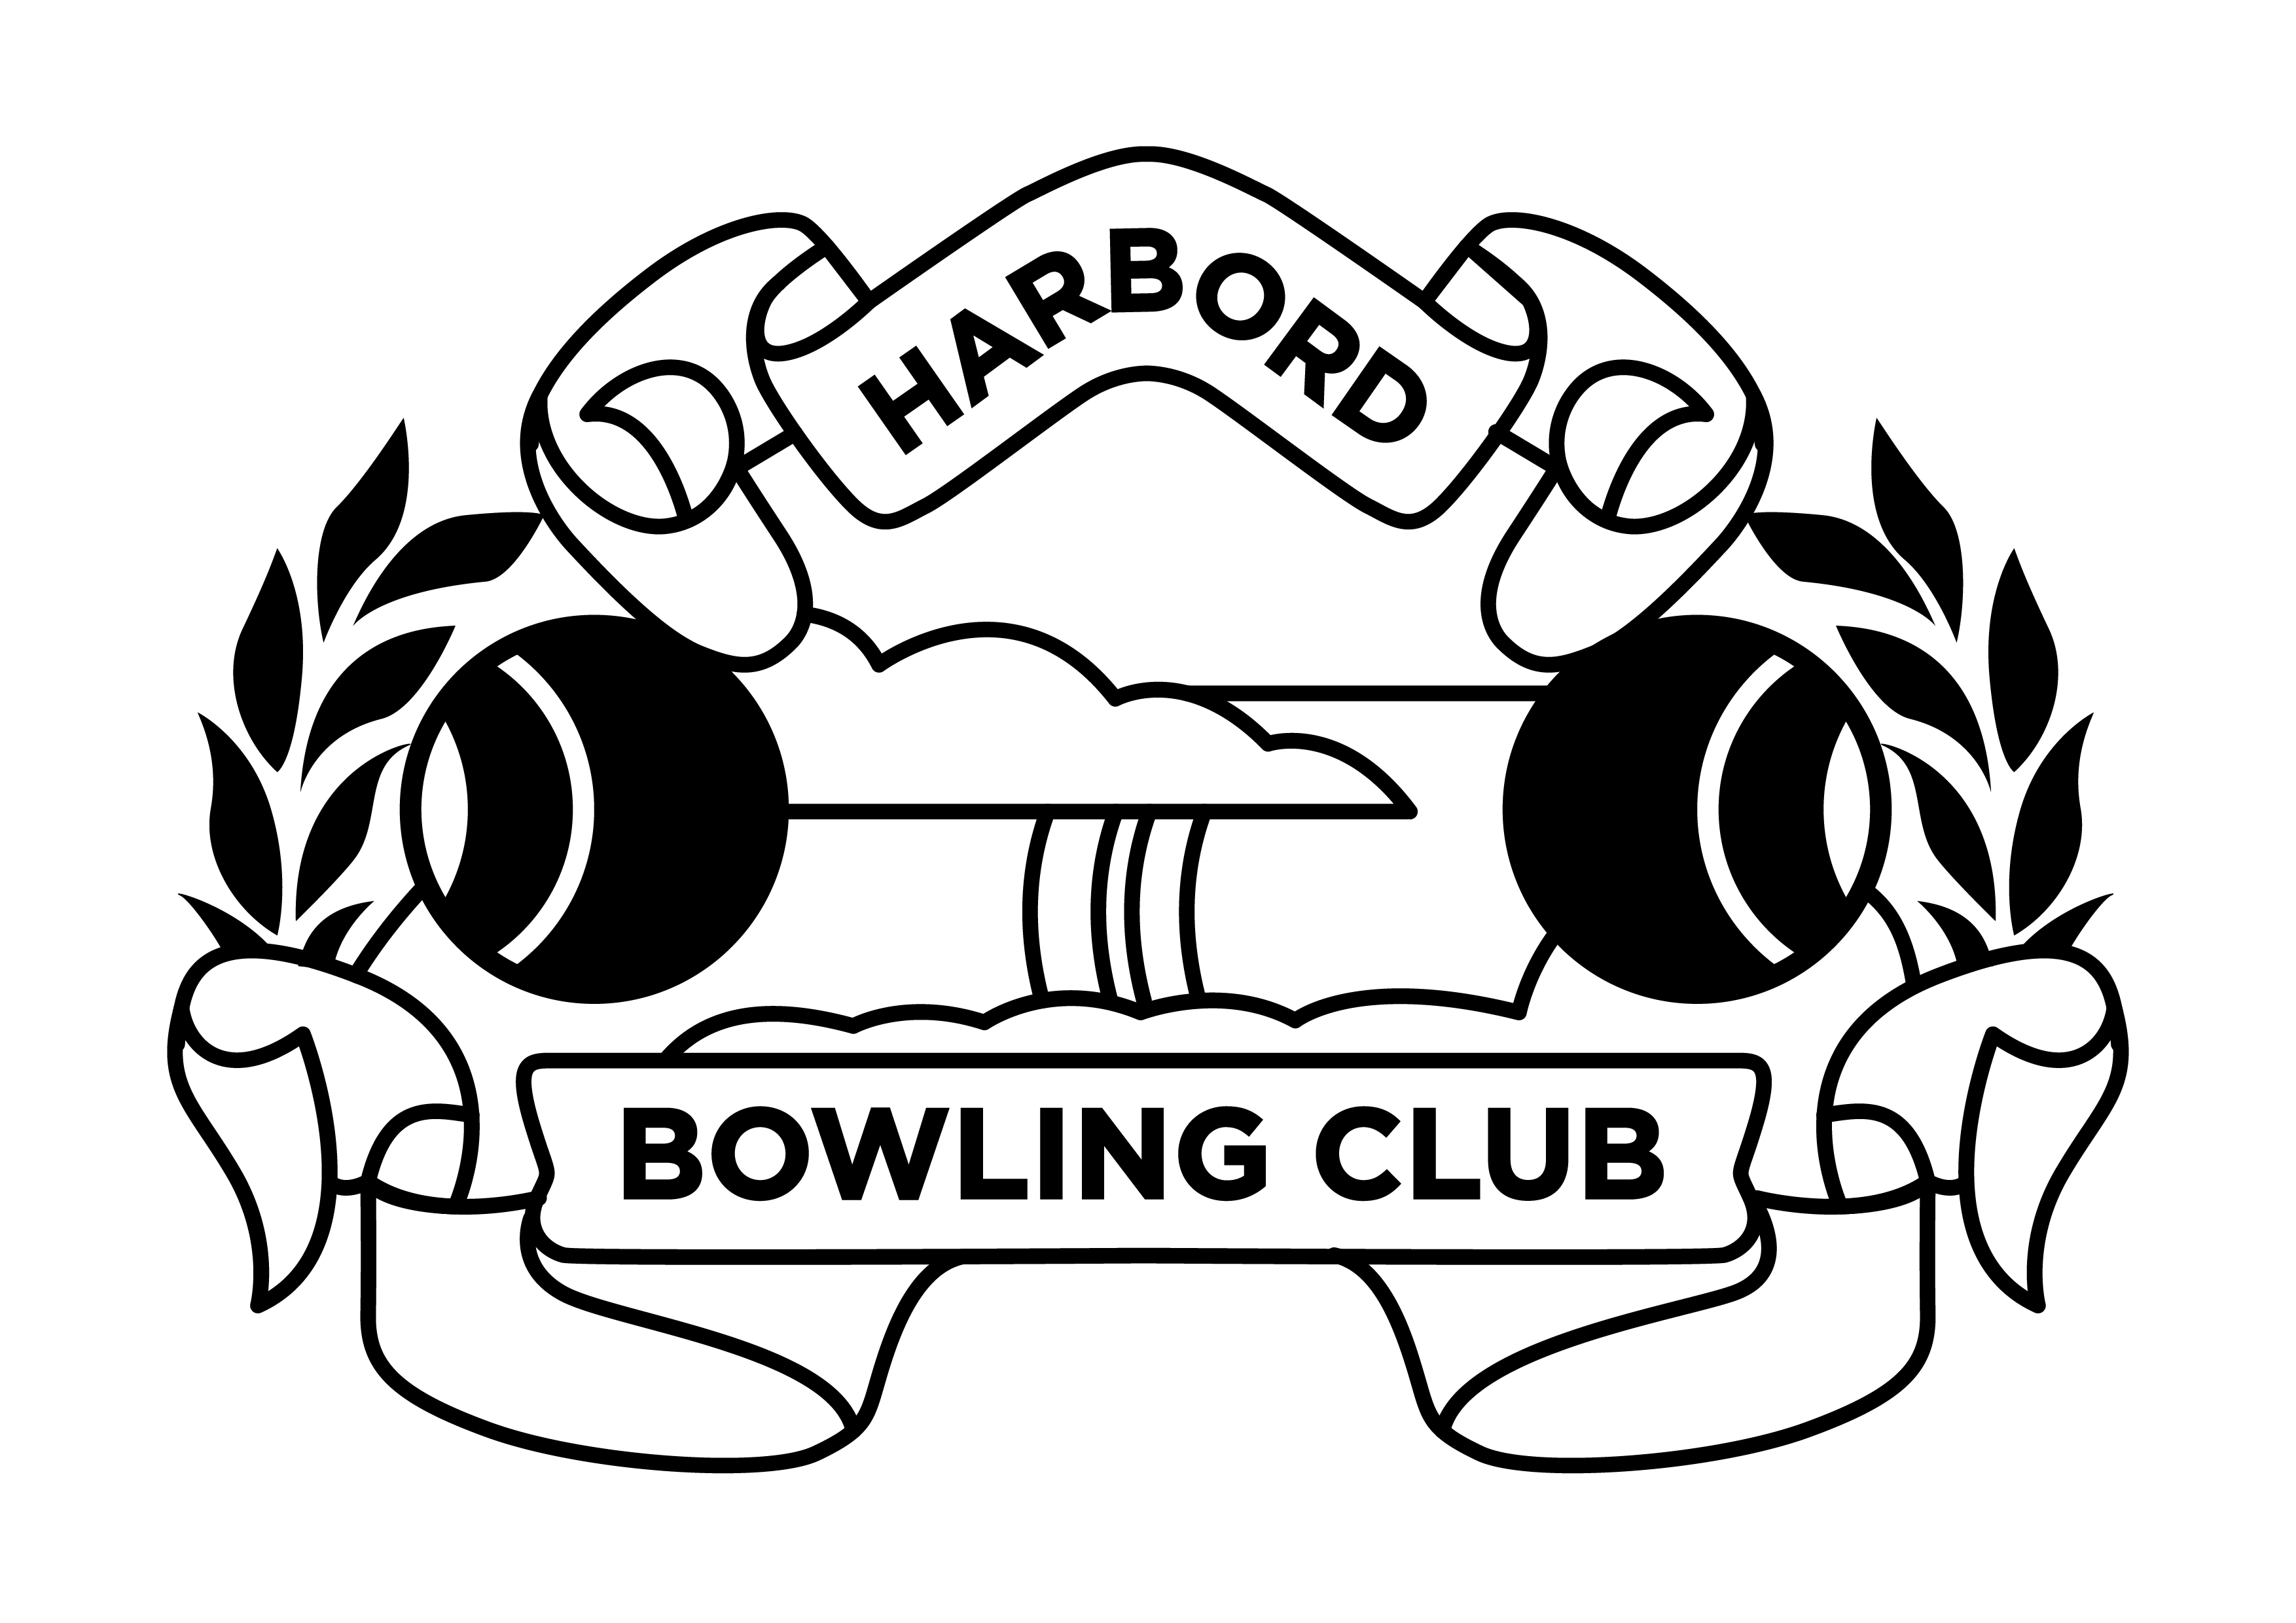 Harbourd Bowling Club Sponspors